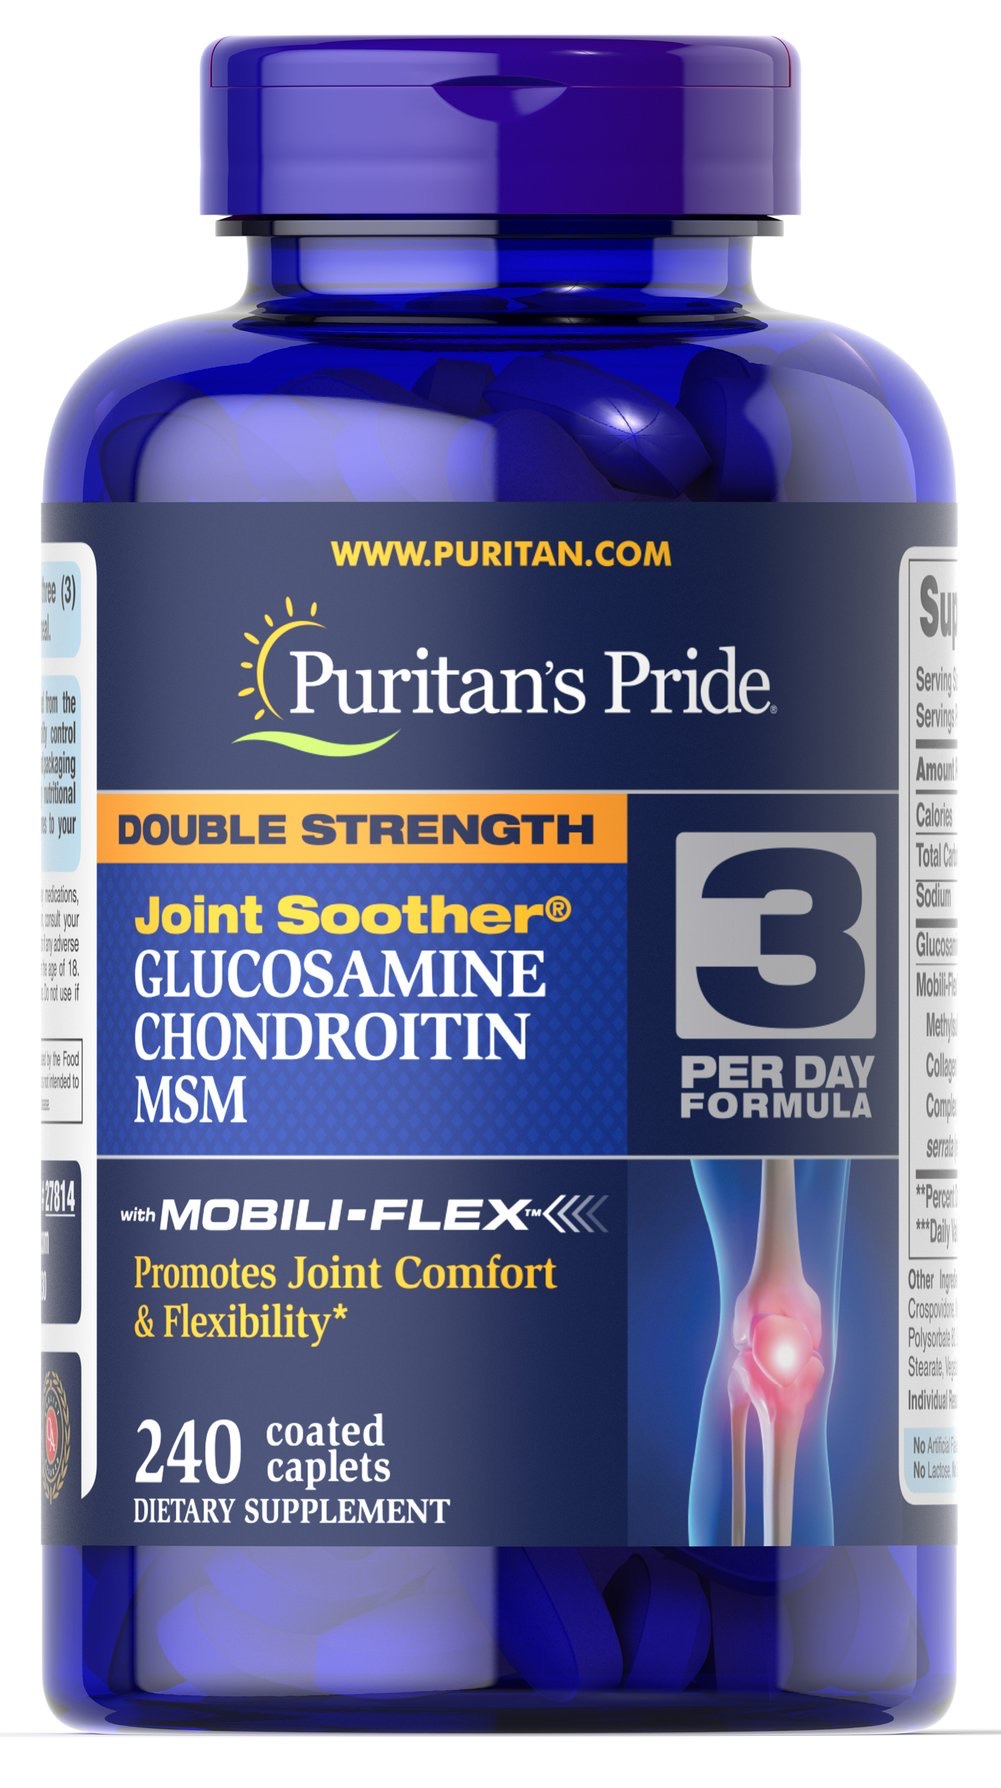 Double Strength Glucosamine, Chondroitin, MSM 240 Caplets|Puritan's Pride骨关节保护药